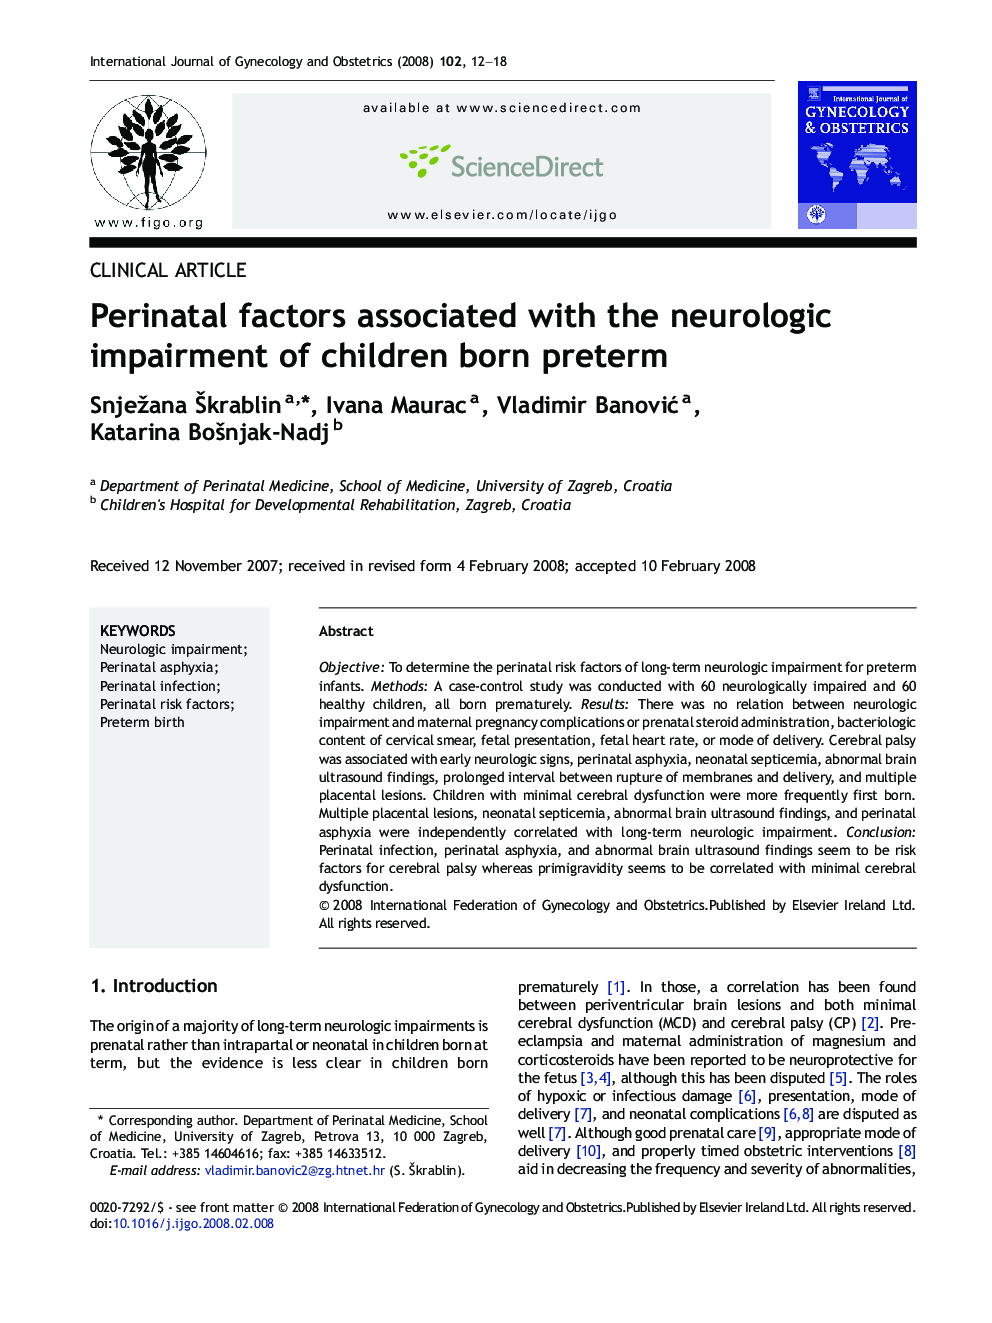 Perinatal factors associated with the neurologic impairment of children born preterm